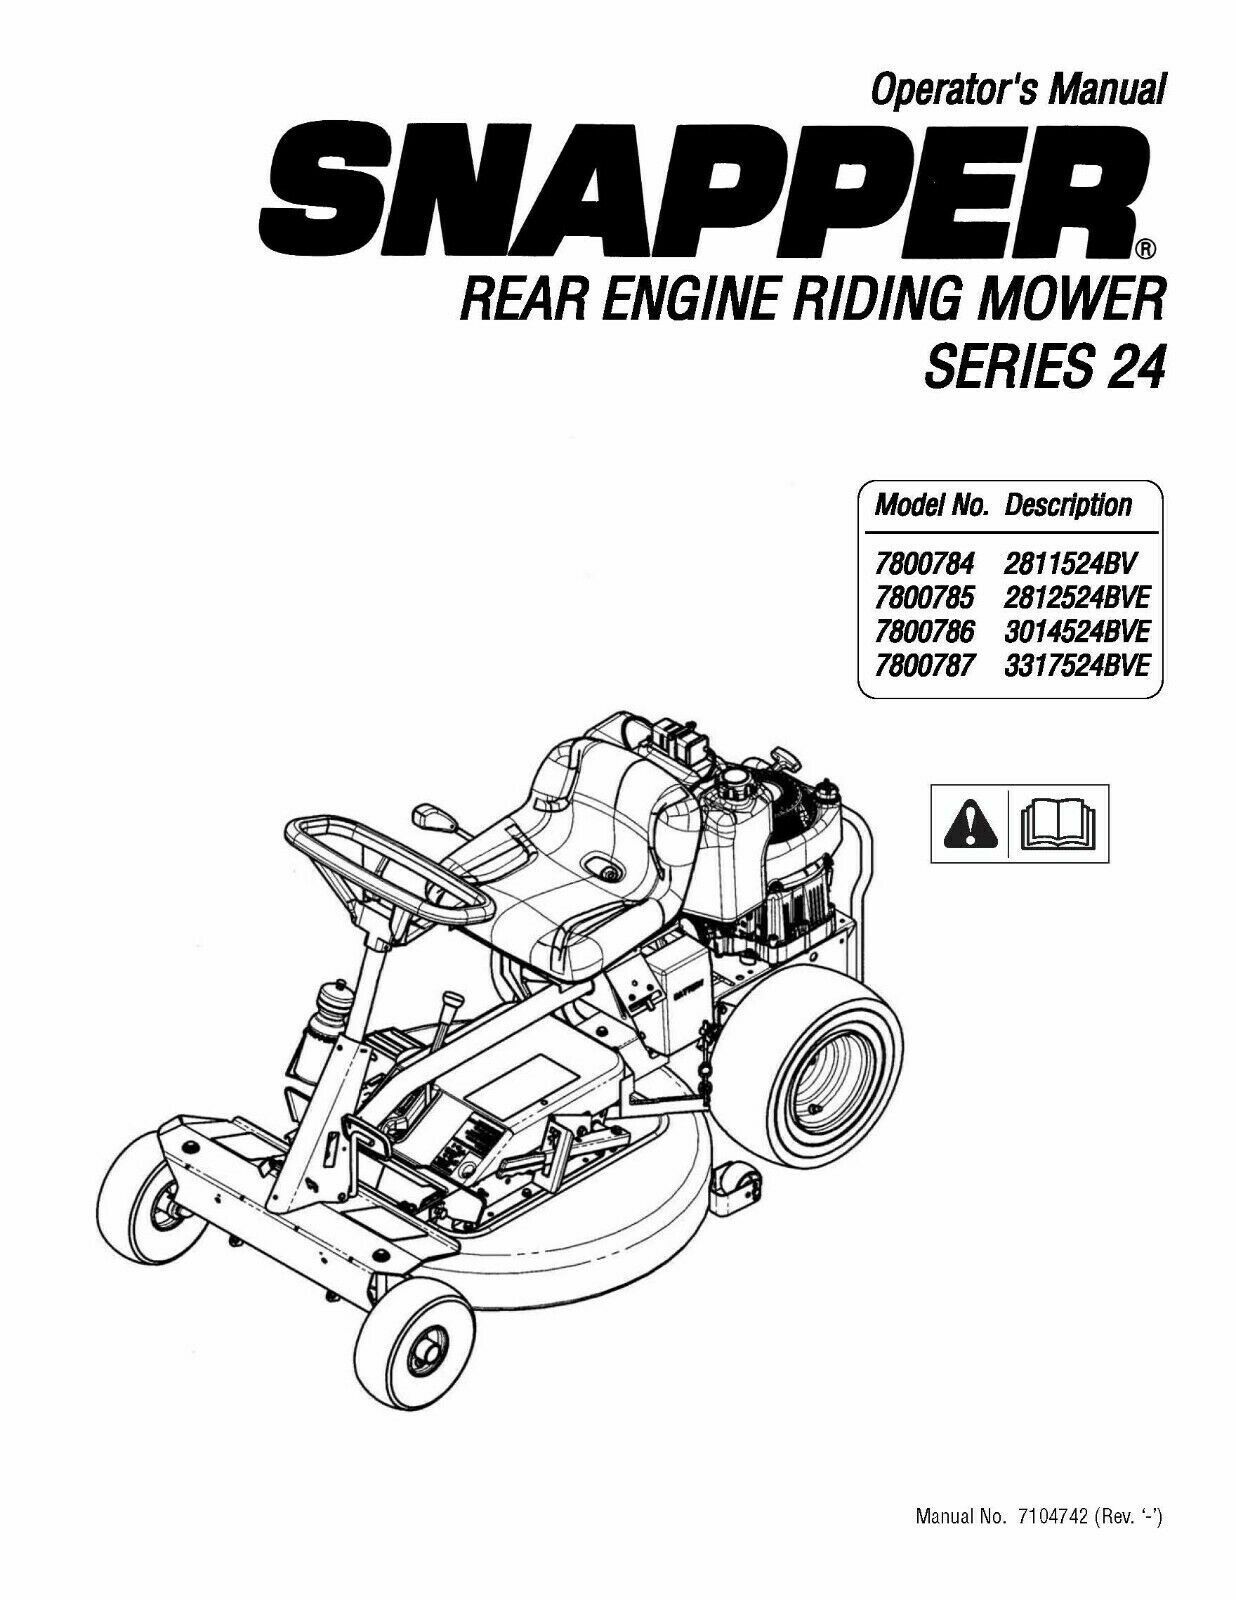 Operators Instruction Maintenance Manual Fits Snapper Lawn Mower Series 24